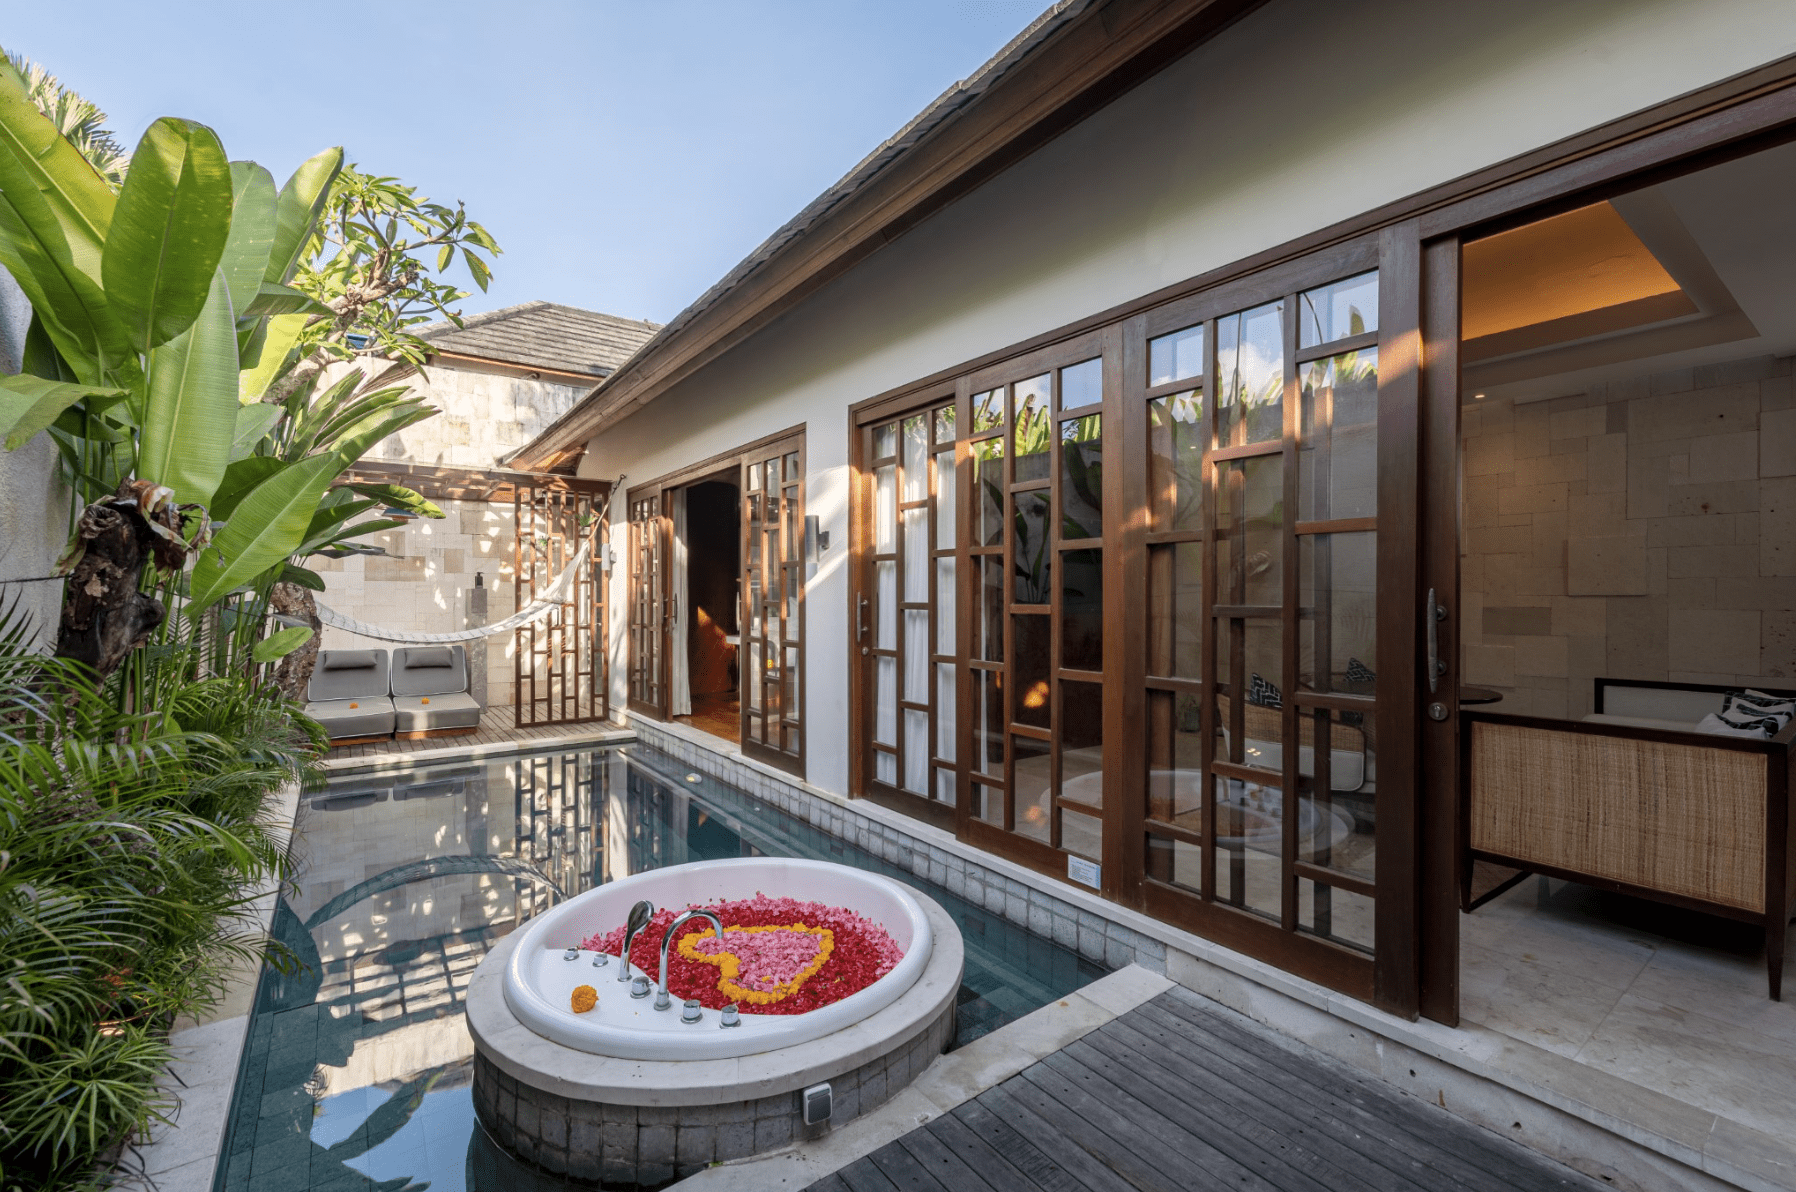 Experience Blissful Seclusion at Asvara Villa Ubud